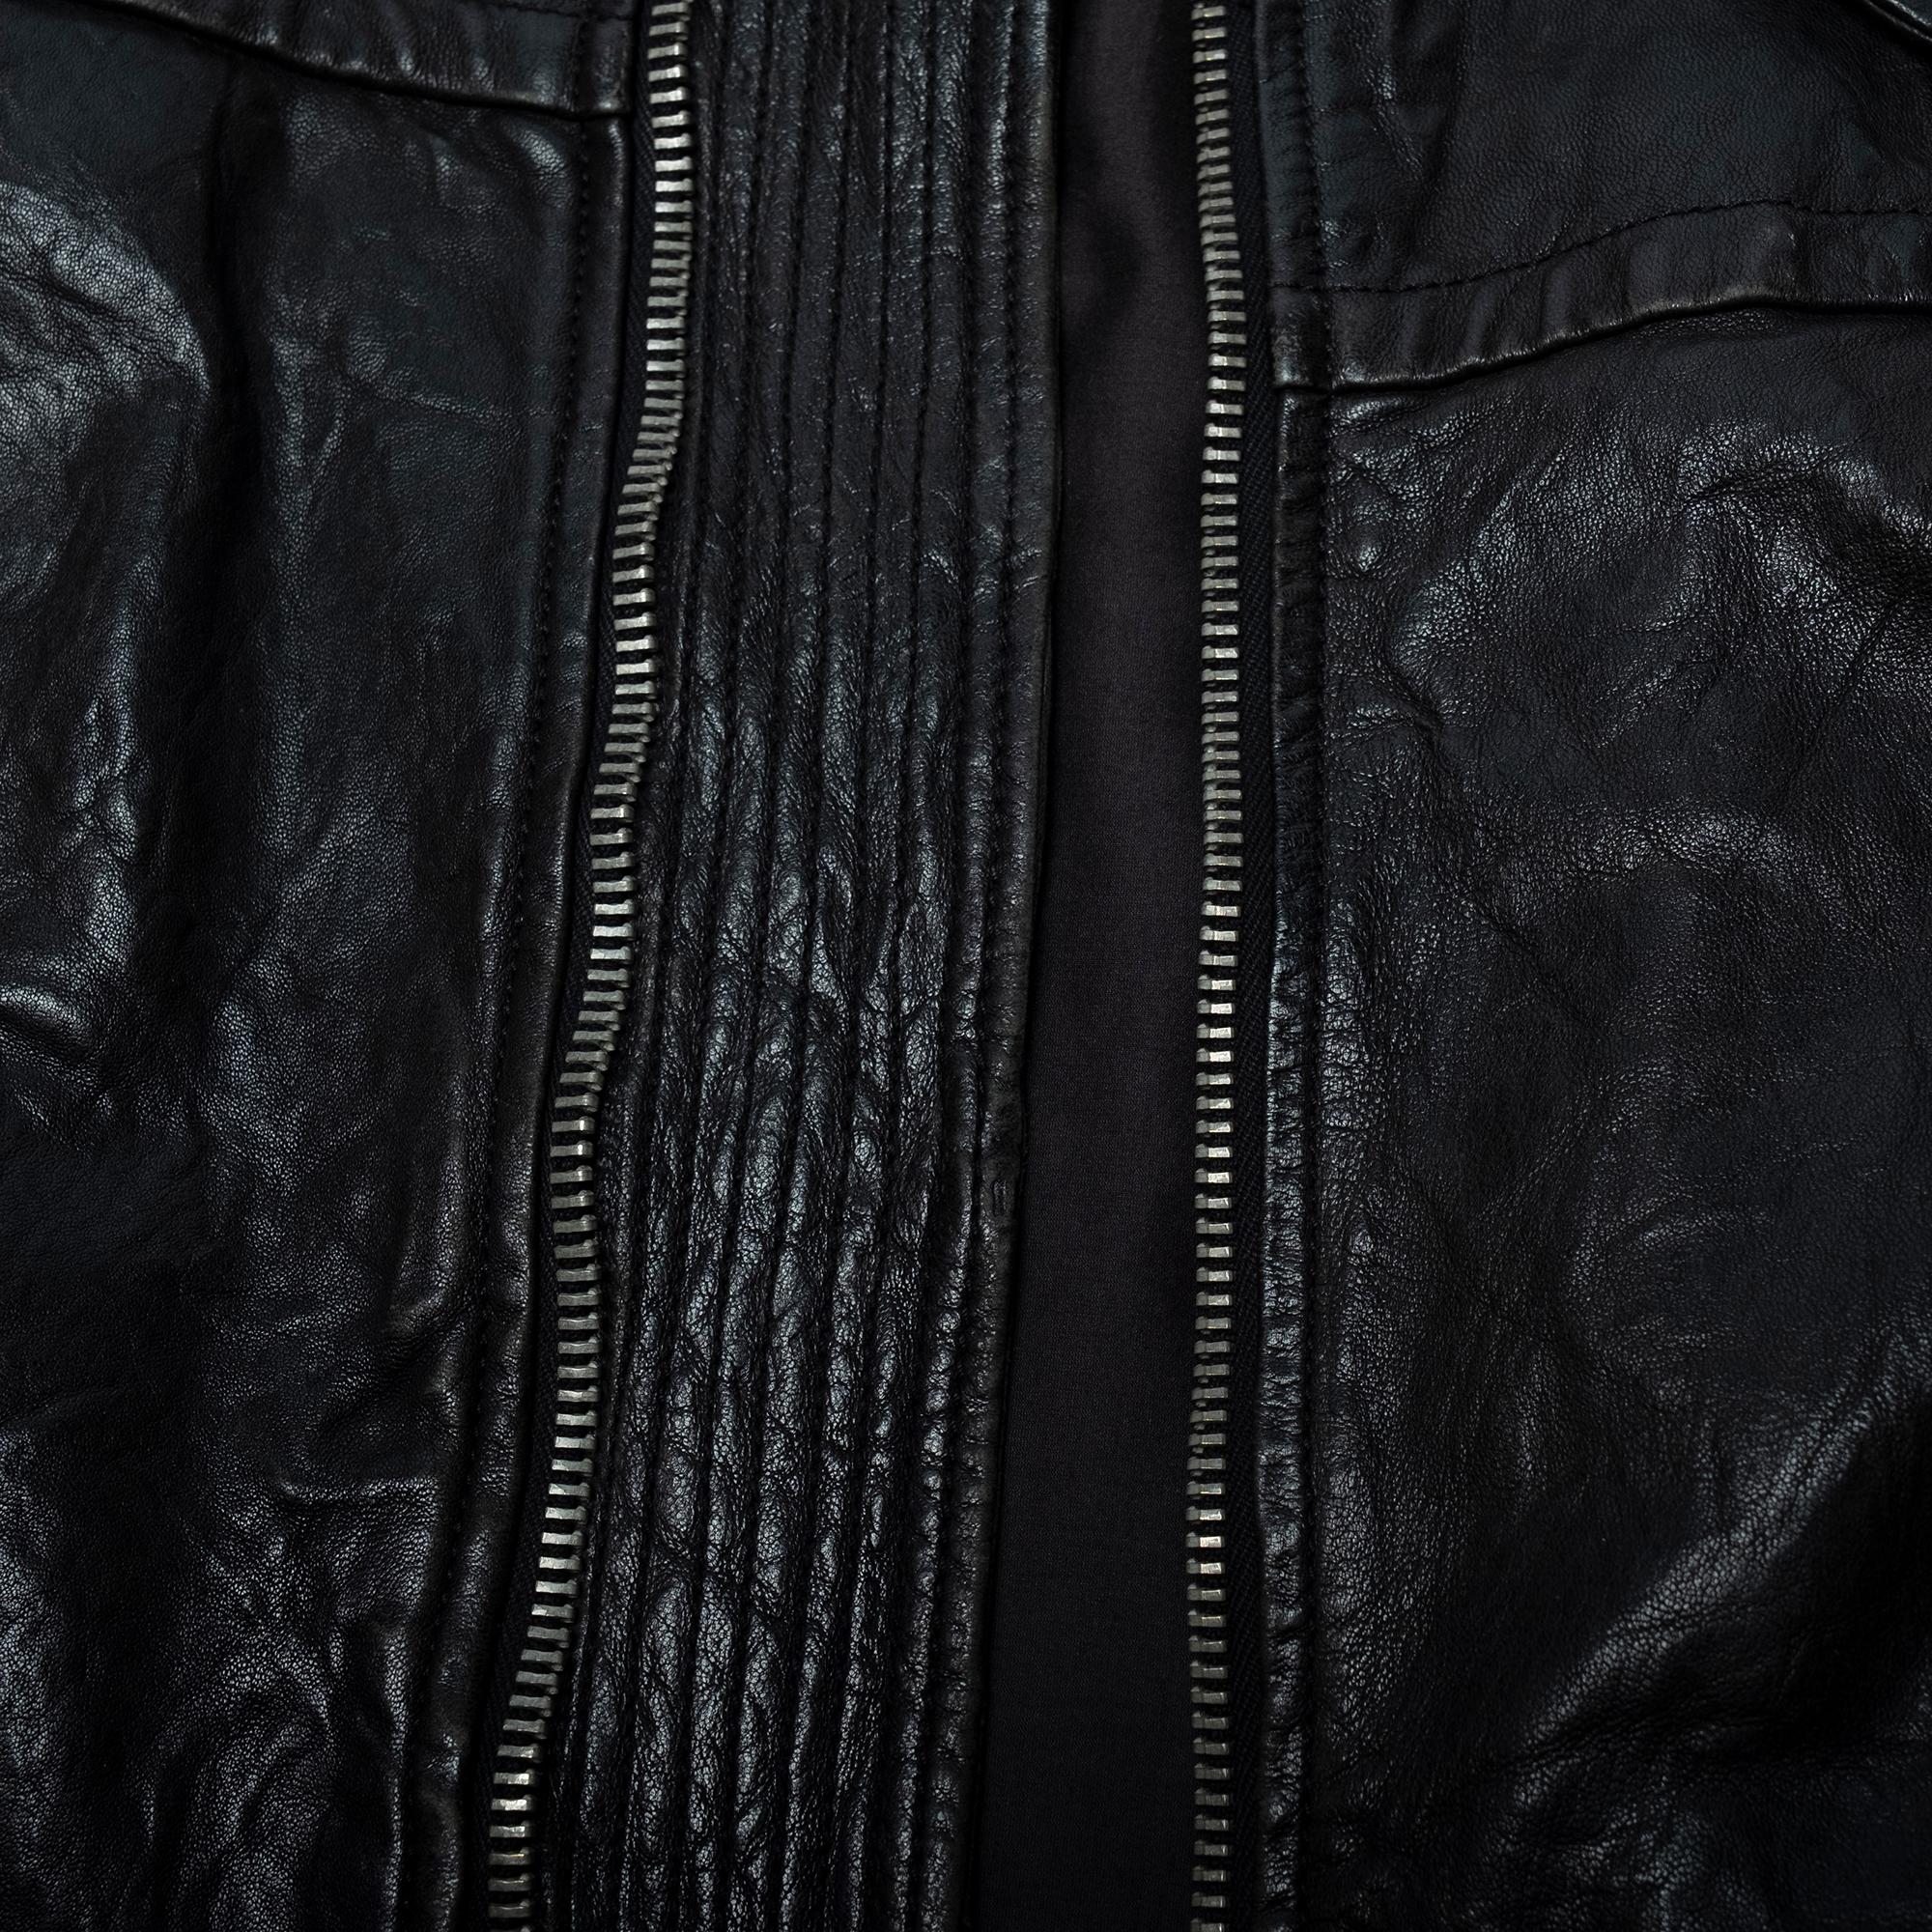 lou reed leather jacket